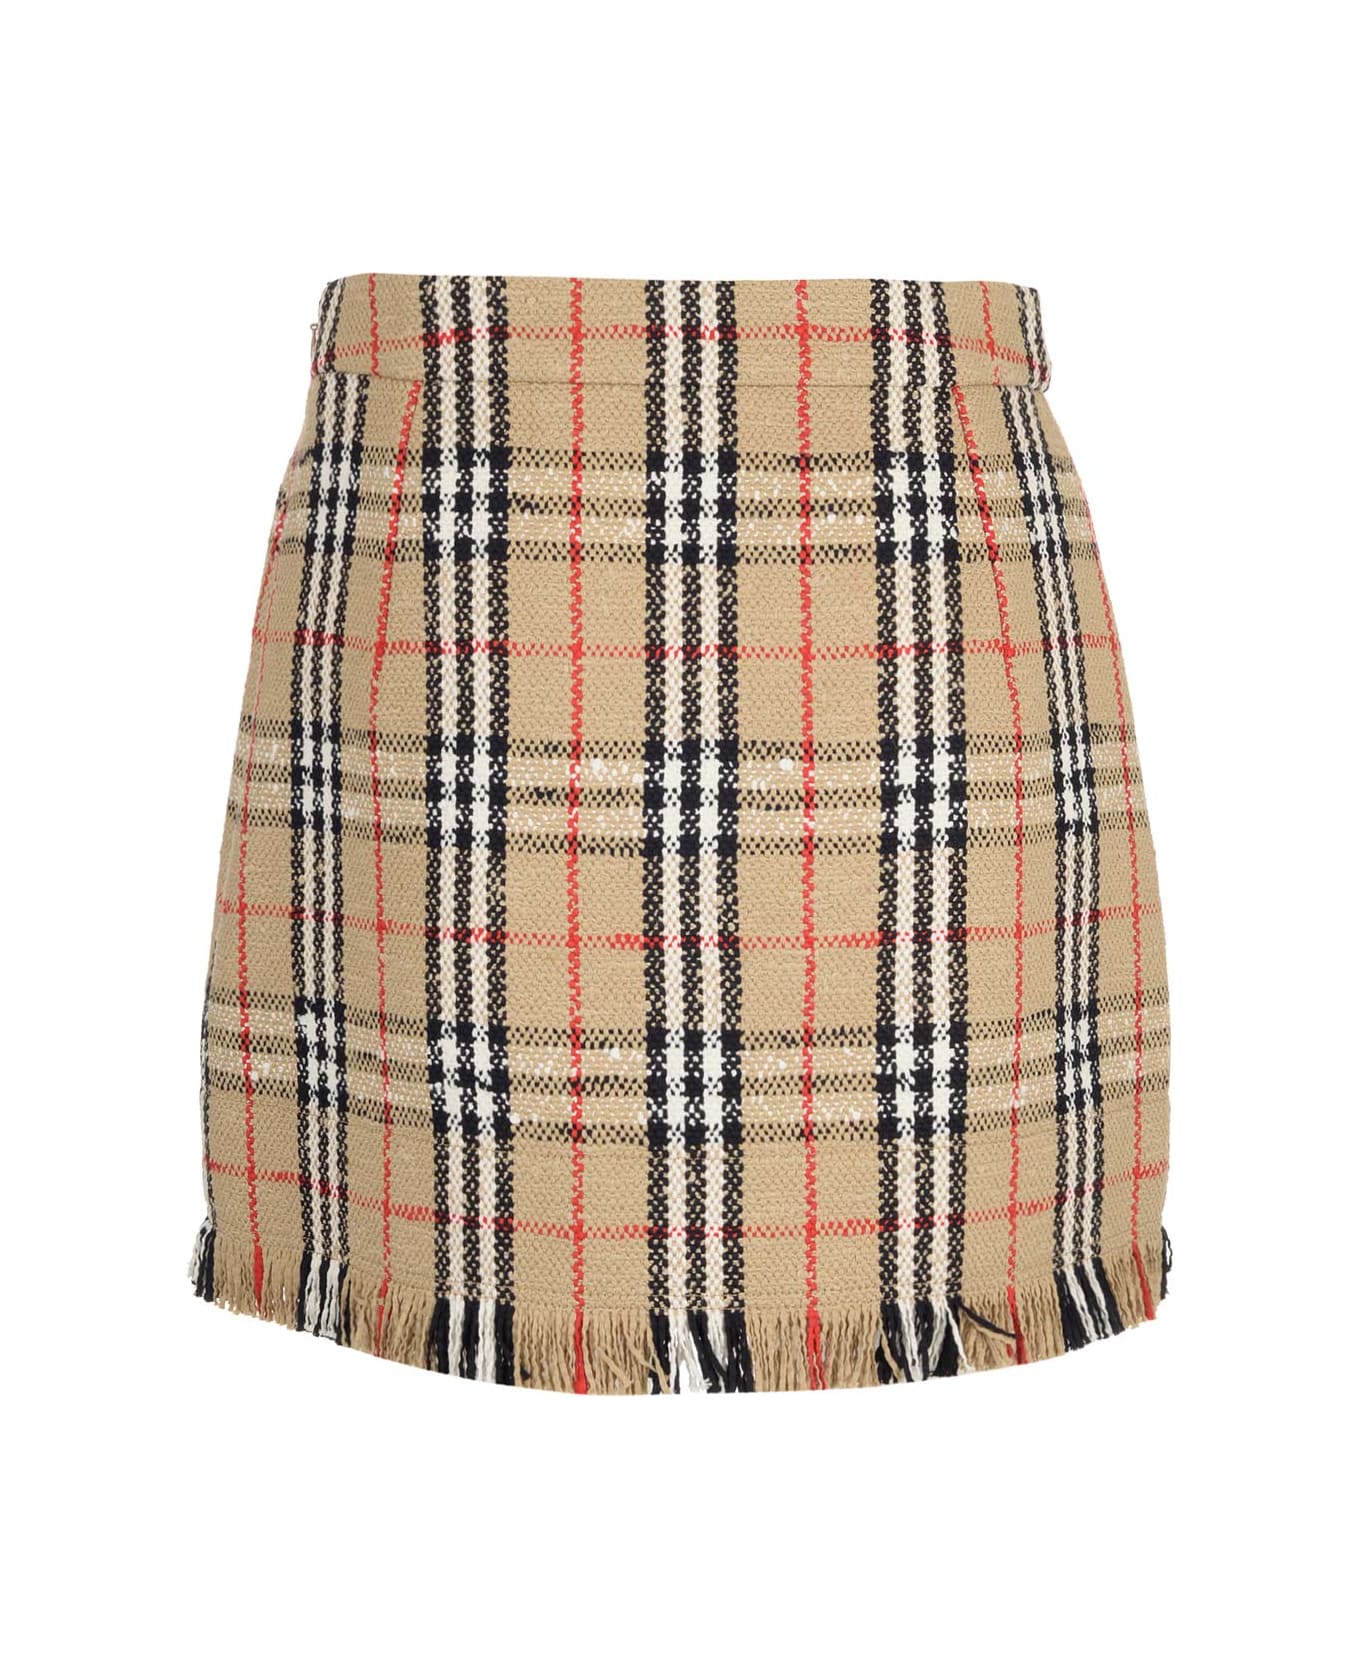 Burberry Vintage Check Miniskirt - Beige